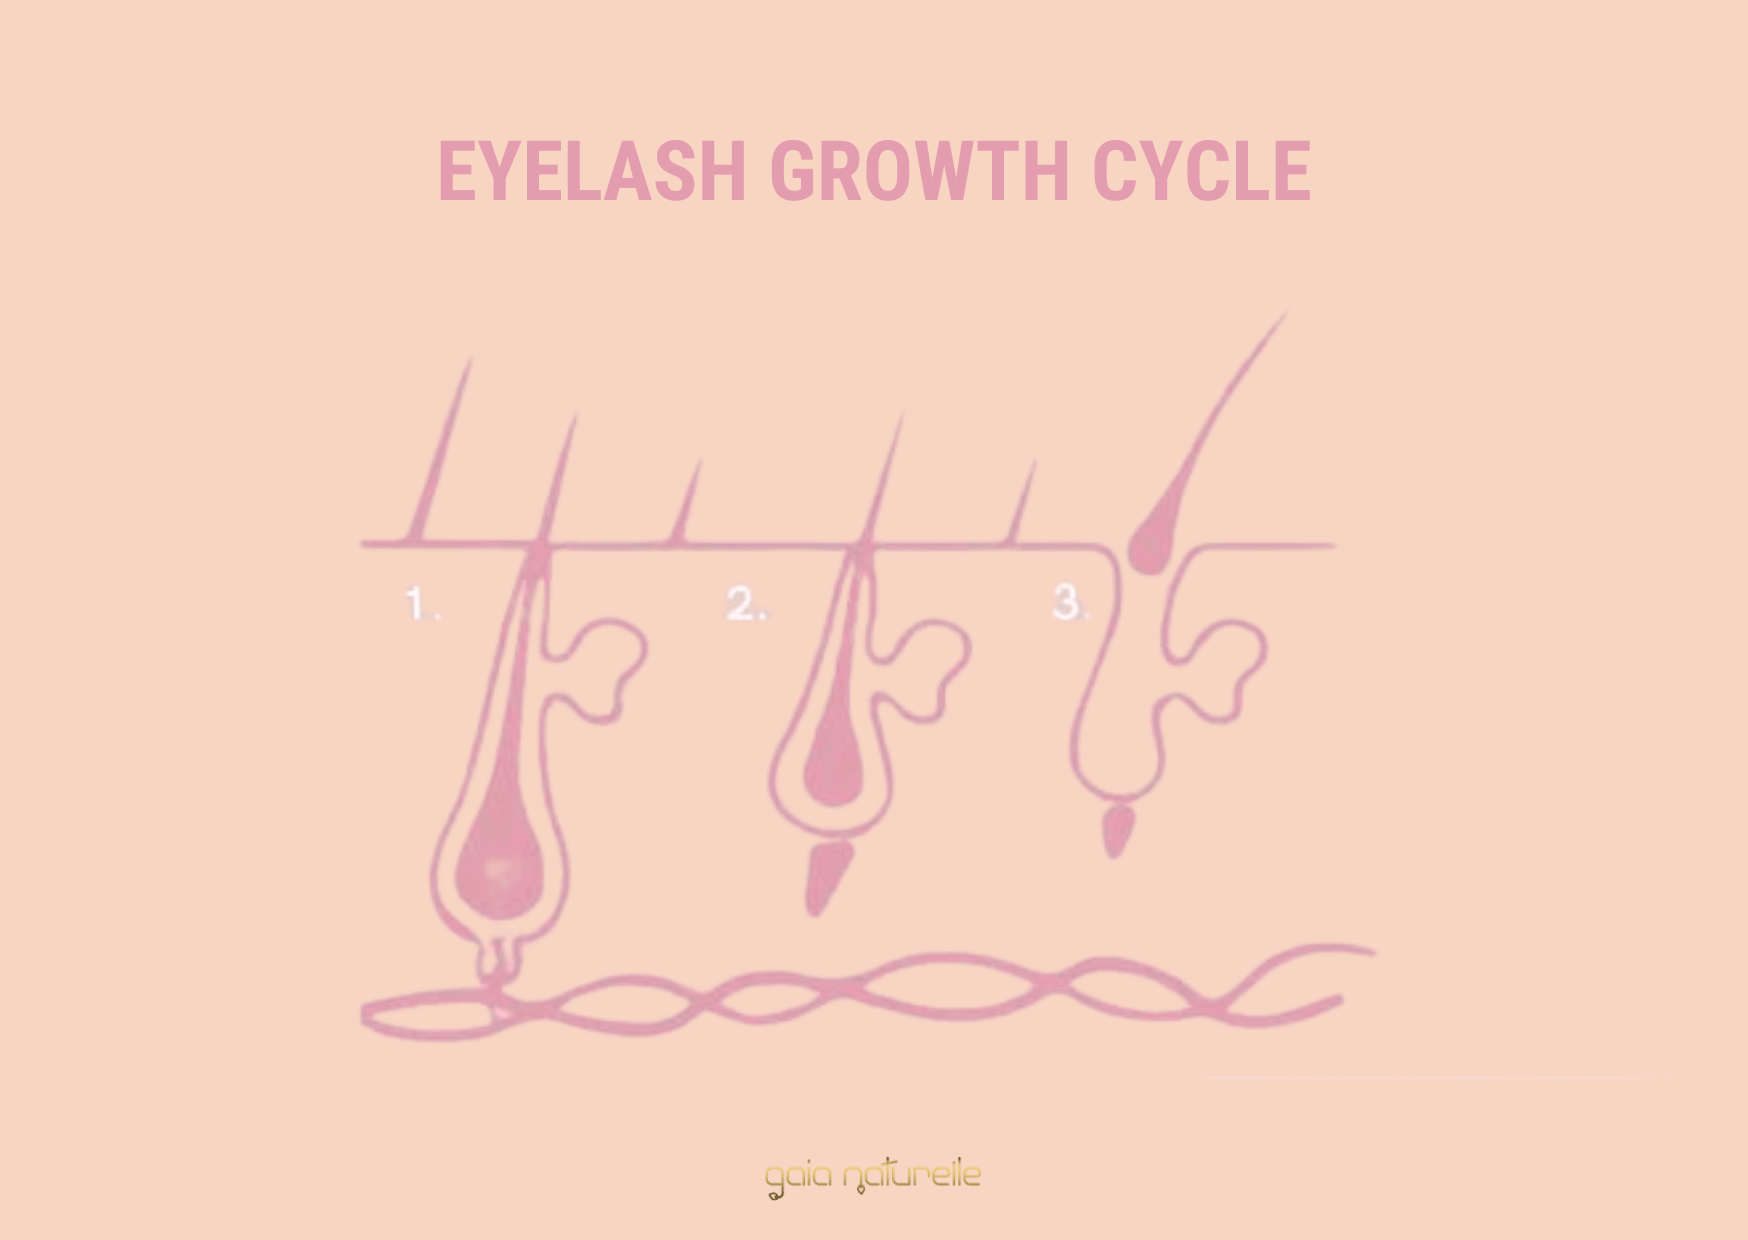 Eyelash growth cycle